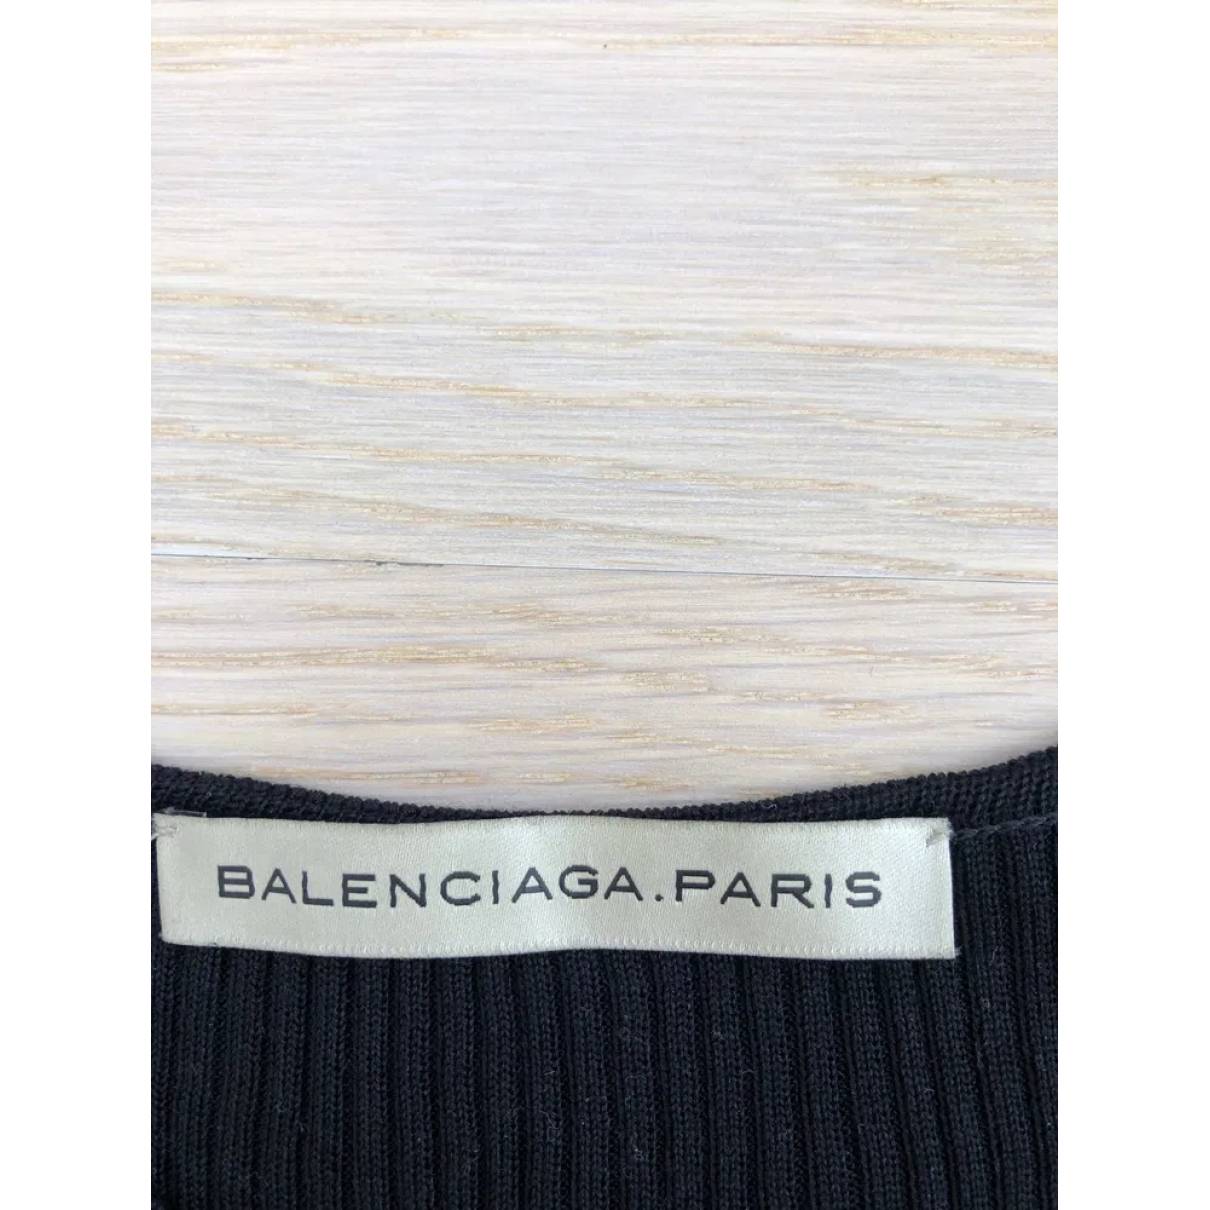 Buy Balenciaga Silk knitwear online